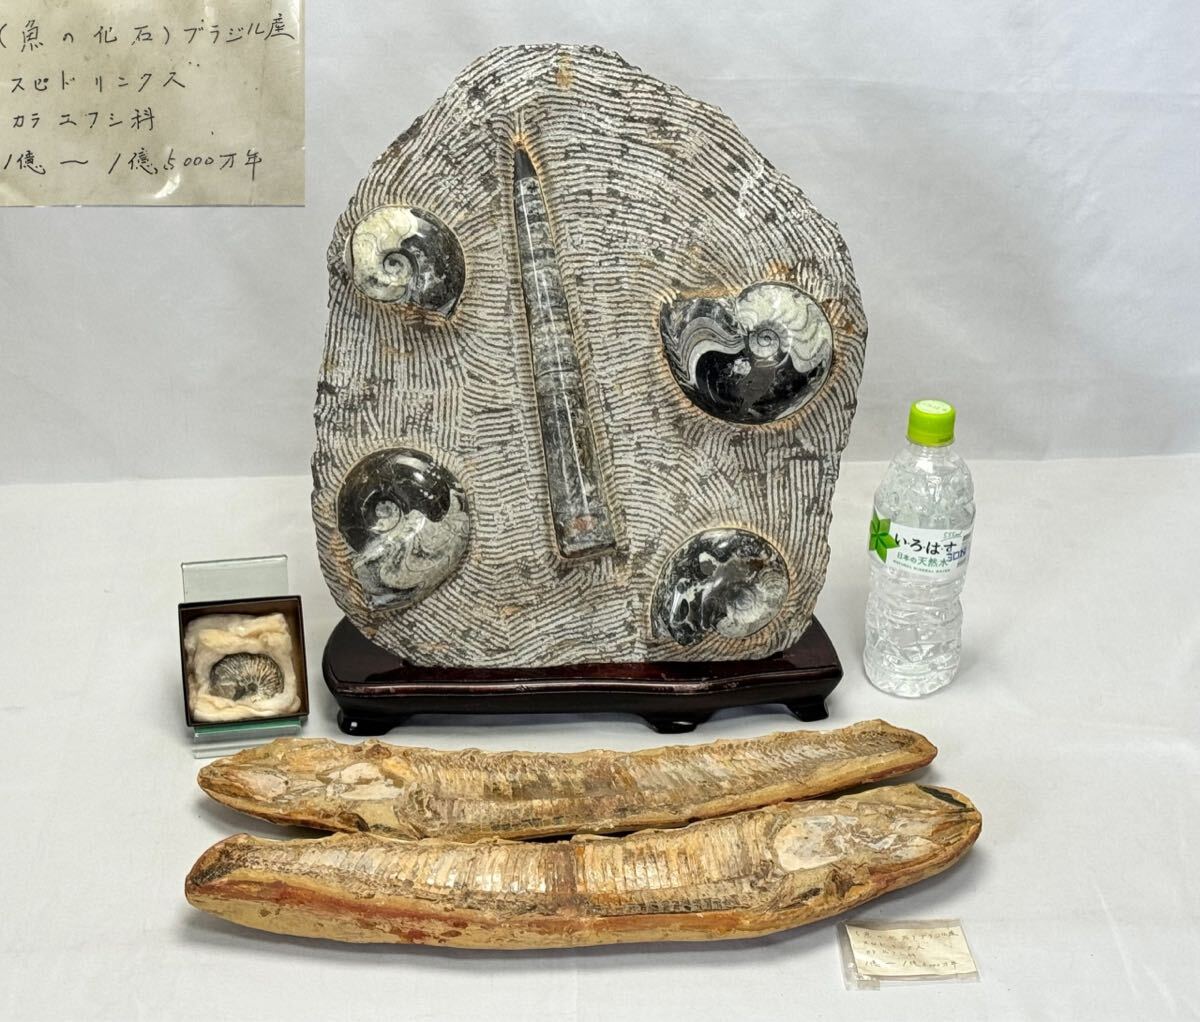 AZ-785 化石 アンモナイト 古代魚 魚の化石 アスピドリンクス? ブラジル産 ジュラ紀 白亜紀 1億～1億5000万年 ジェムストーン 化石標本の画像1